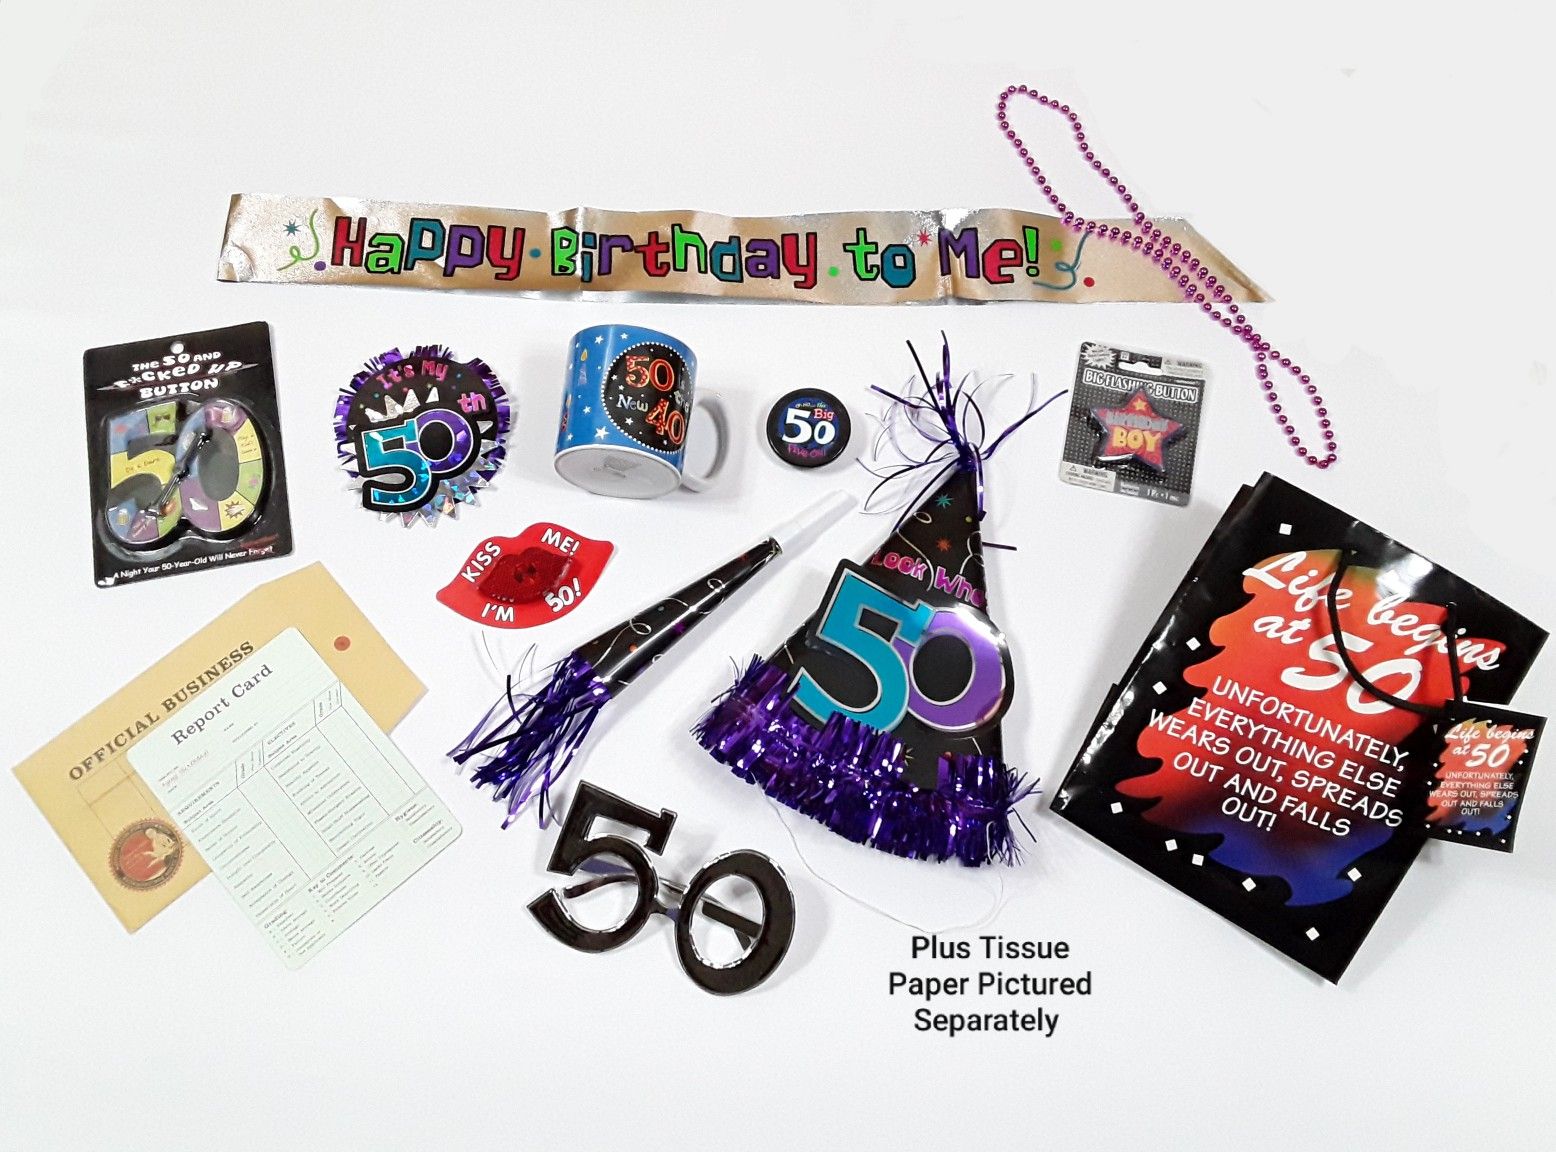 50th Birthday Party Supplies - Ceramic Mug, Gift Bag, Sash, LED Buttons & More!